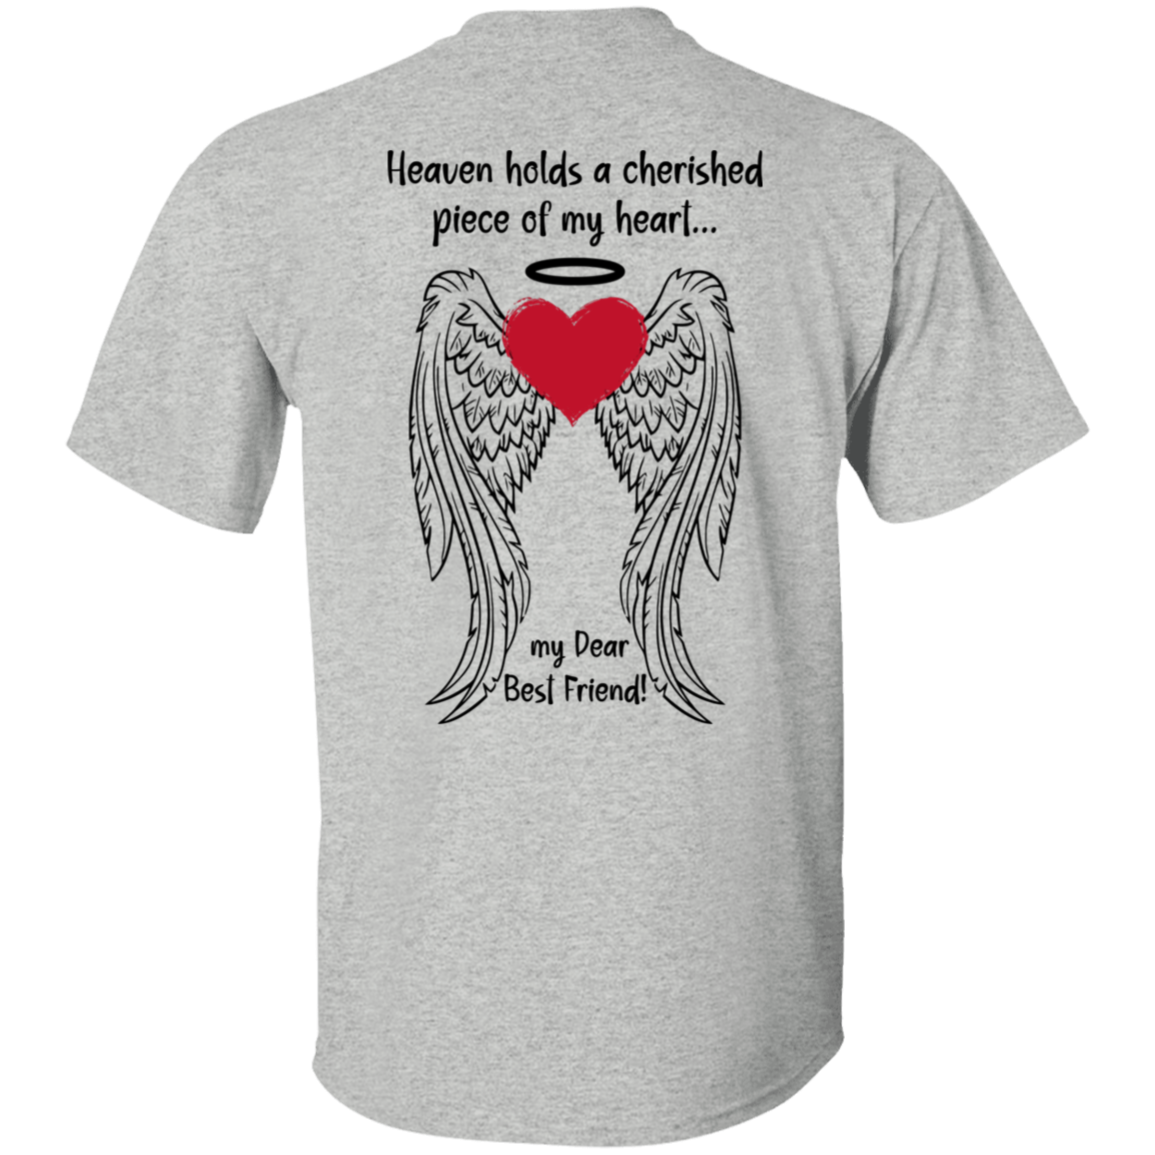 𝗕𝗘𝗦𝗧 𝗙𝗥𝗜𝗘𝗡𝗗, HEAVENLY GUARDIAN - Unisex T-Shirt